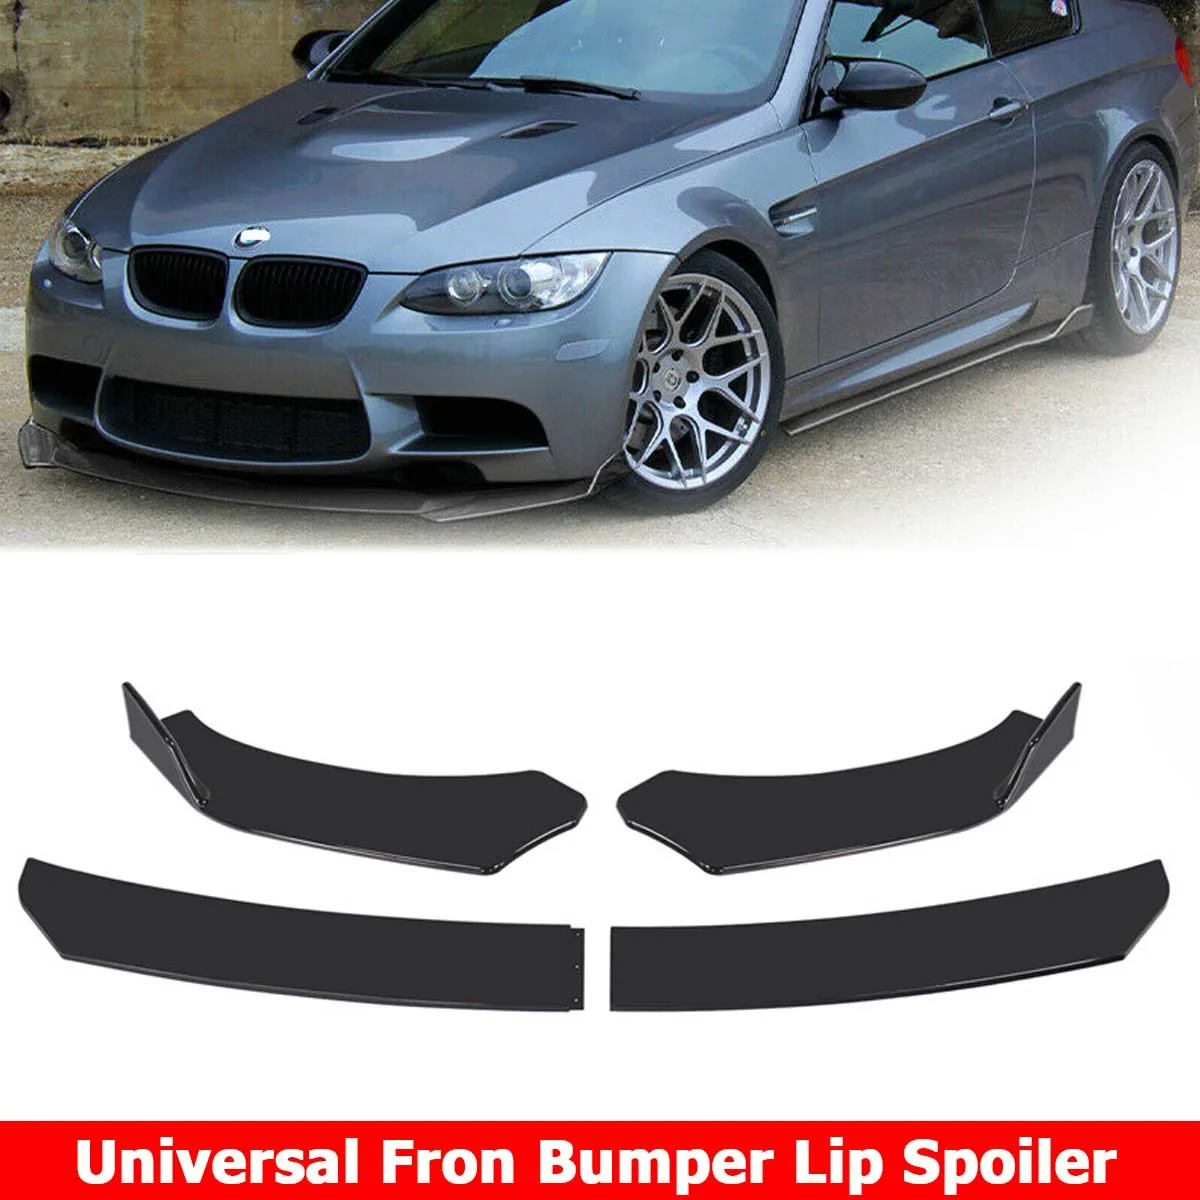 Front Bumper Lip Spoiler Splitter Protection Deflector Body Kit Guards For BMW E90 E92 E93 325i 335i 320i 328i Car Accessories